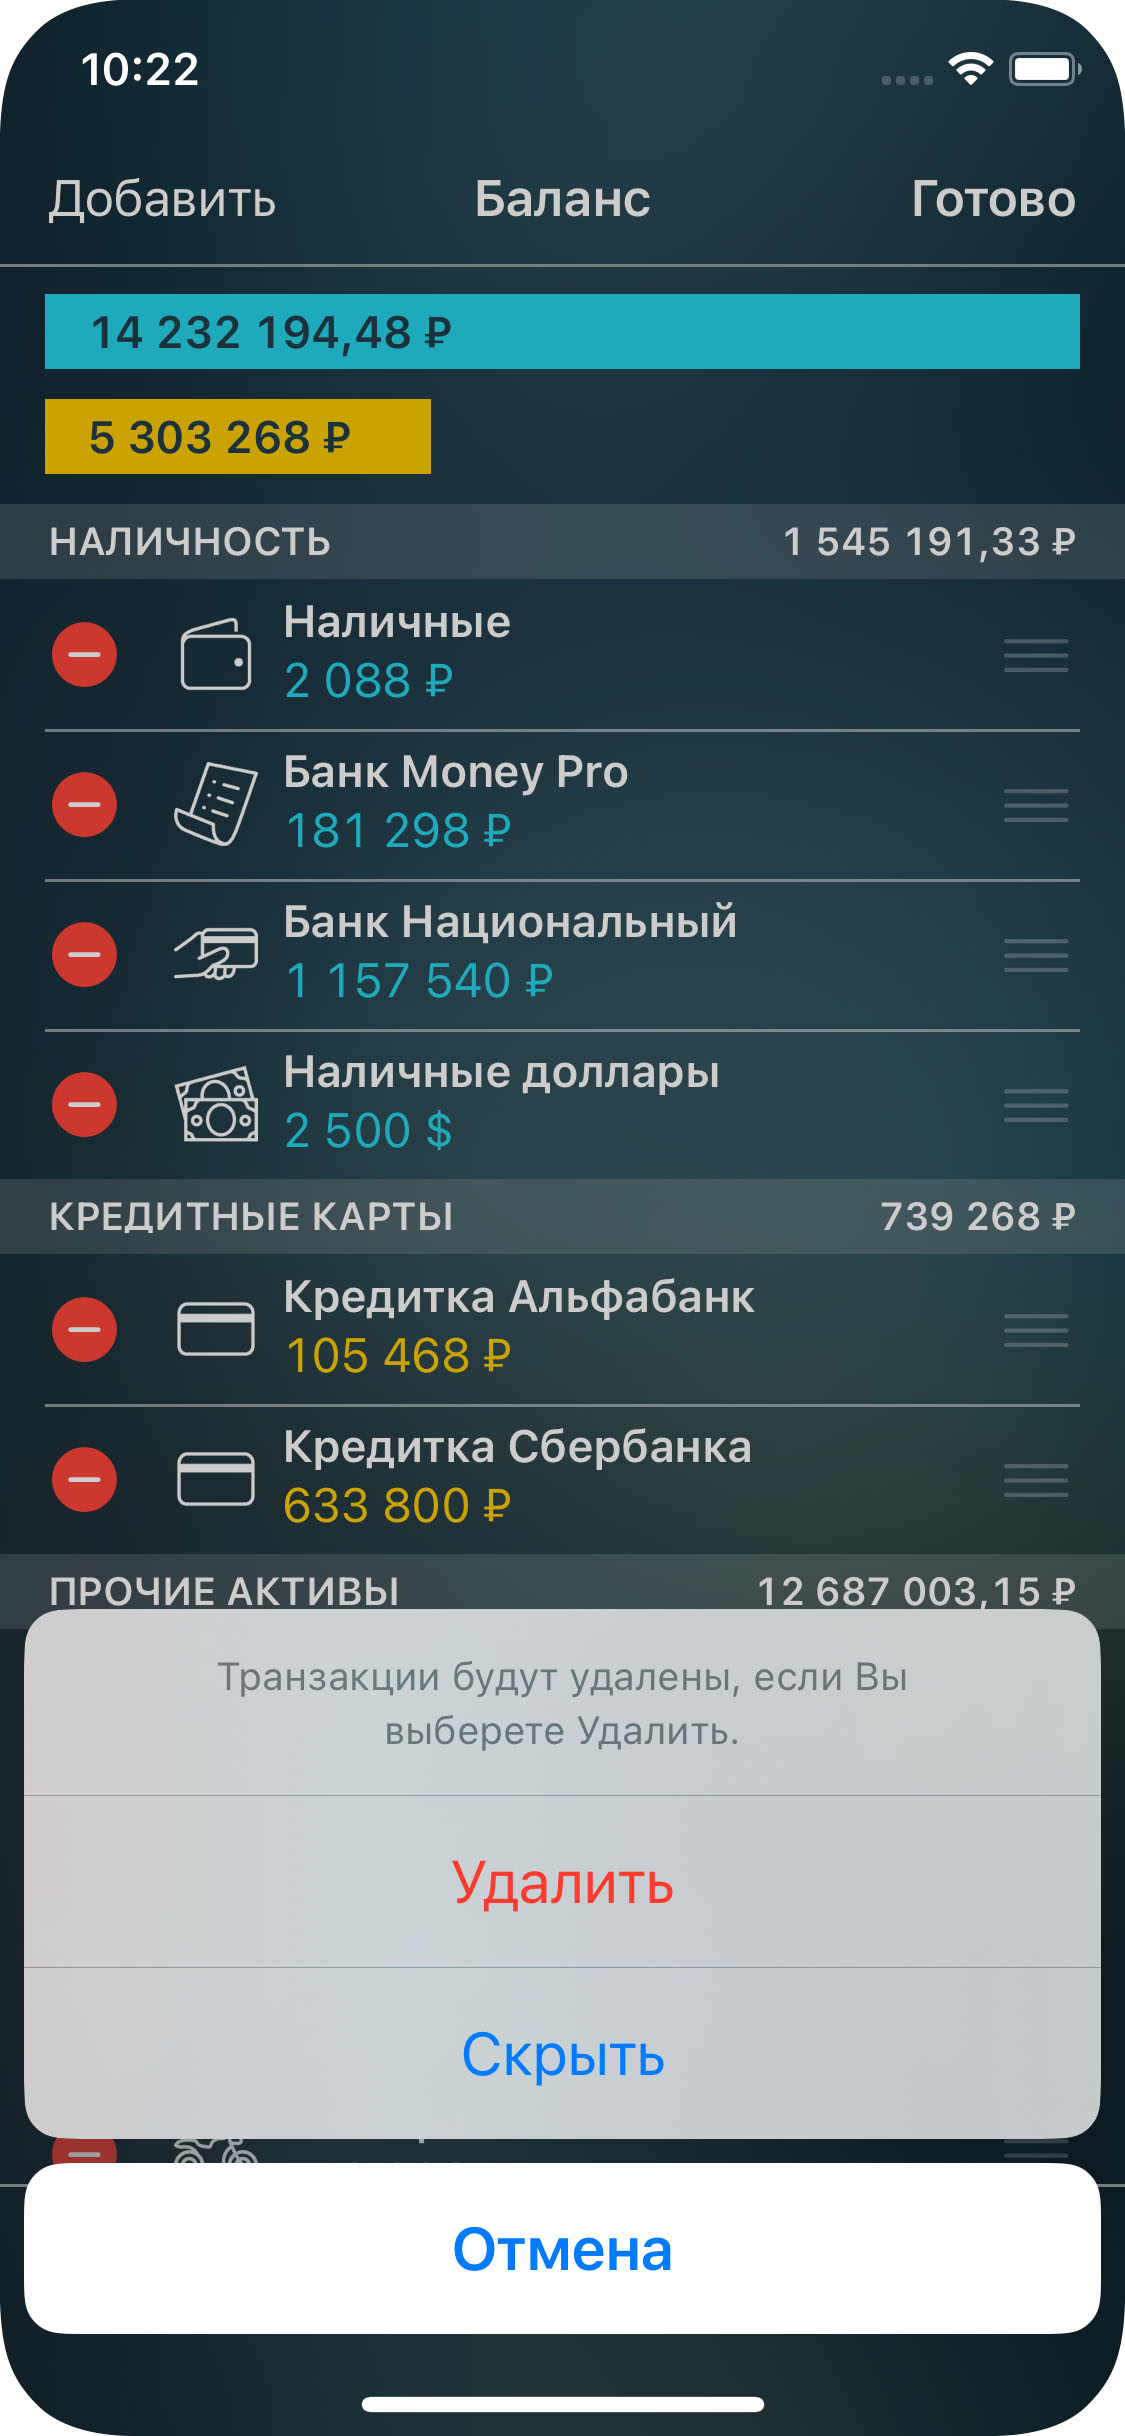 Money Pro - Удаление счёта - iPhone